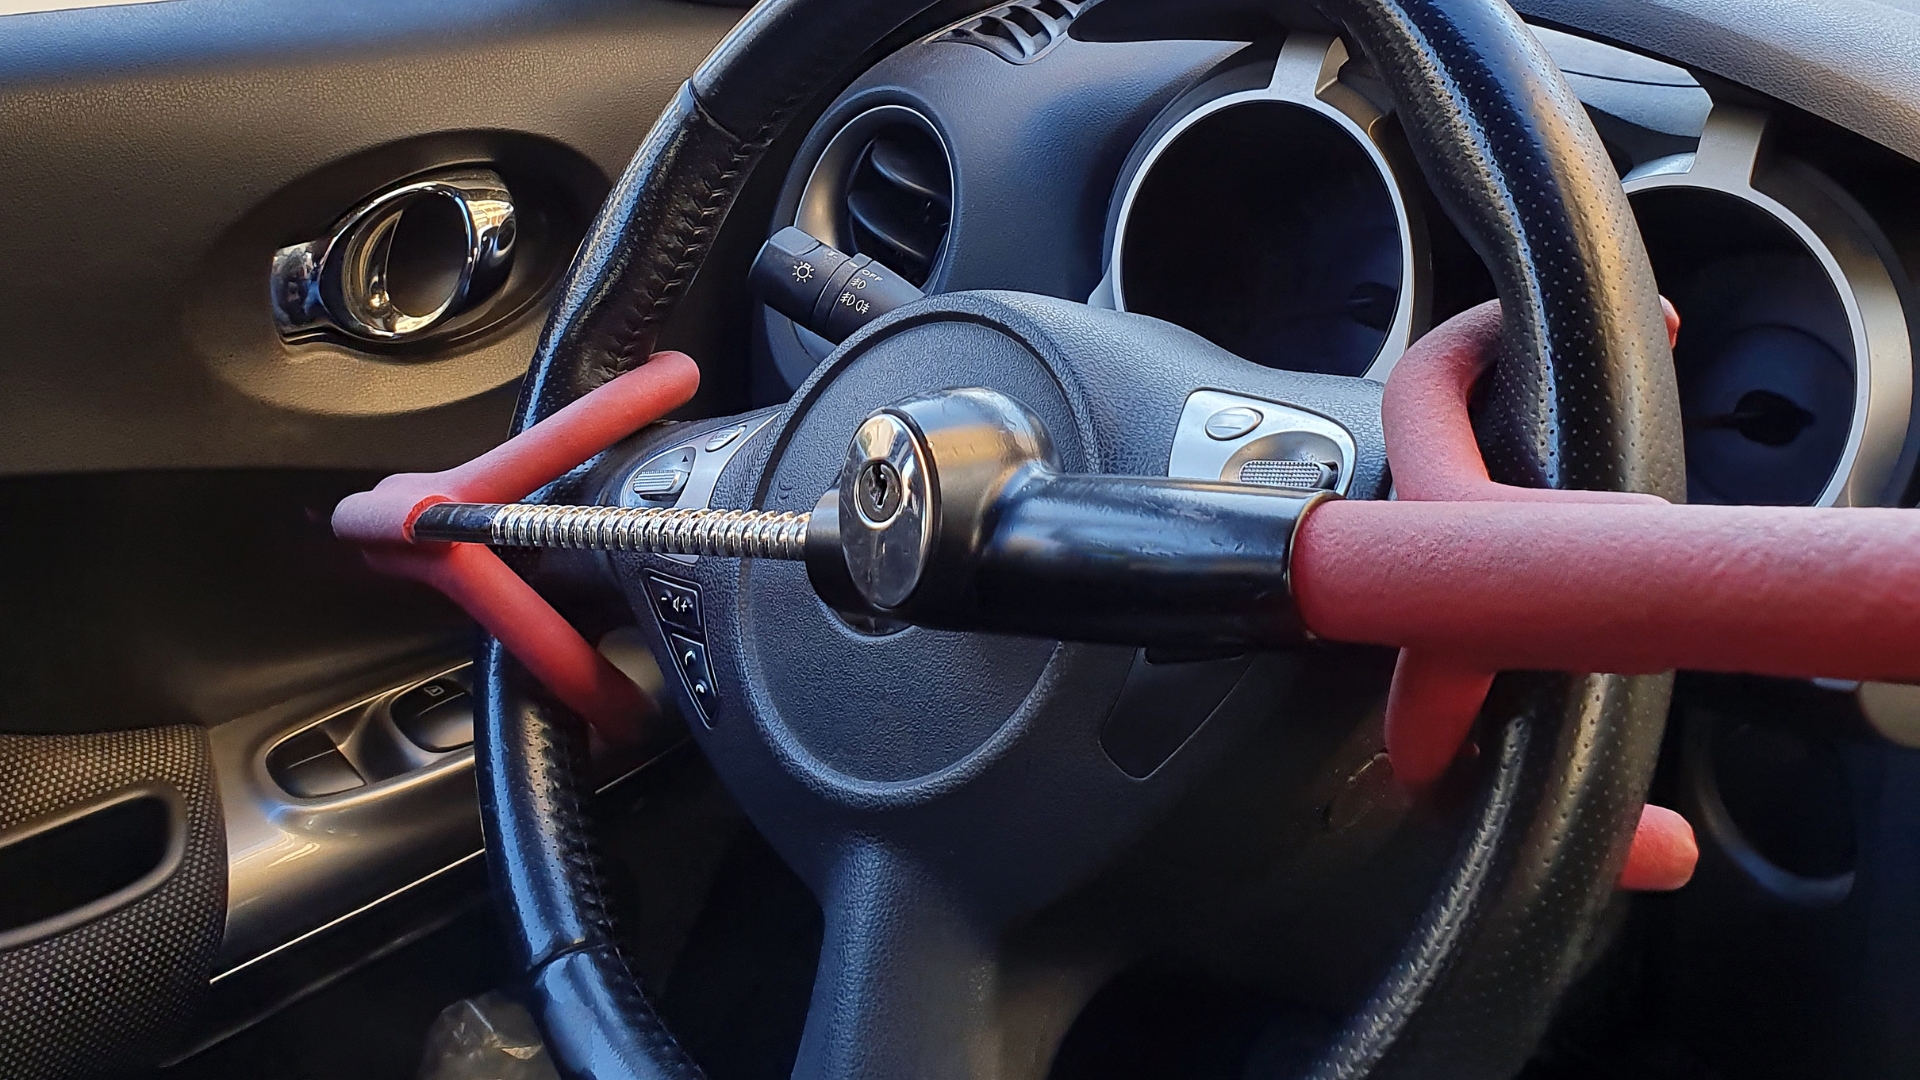 A steering wheel lock anti-theft device